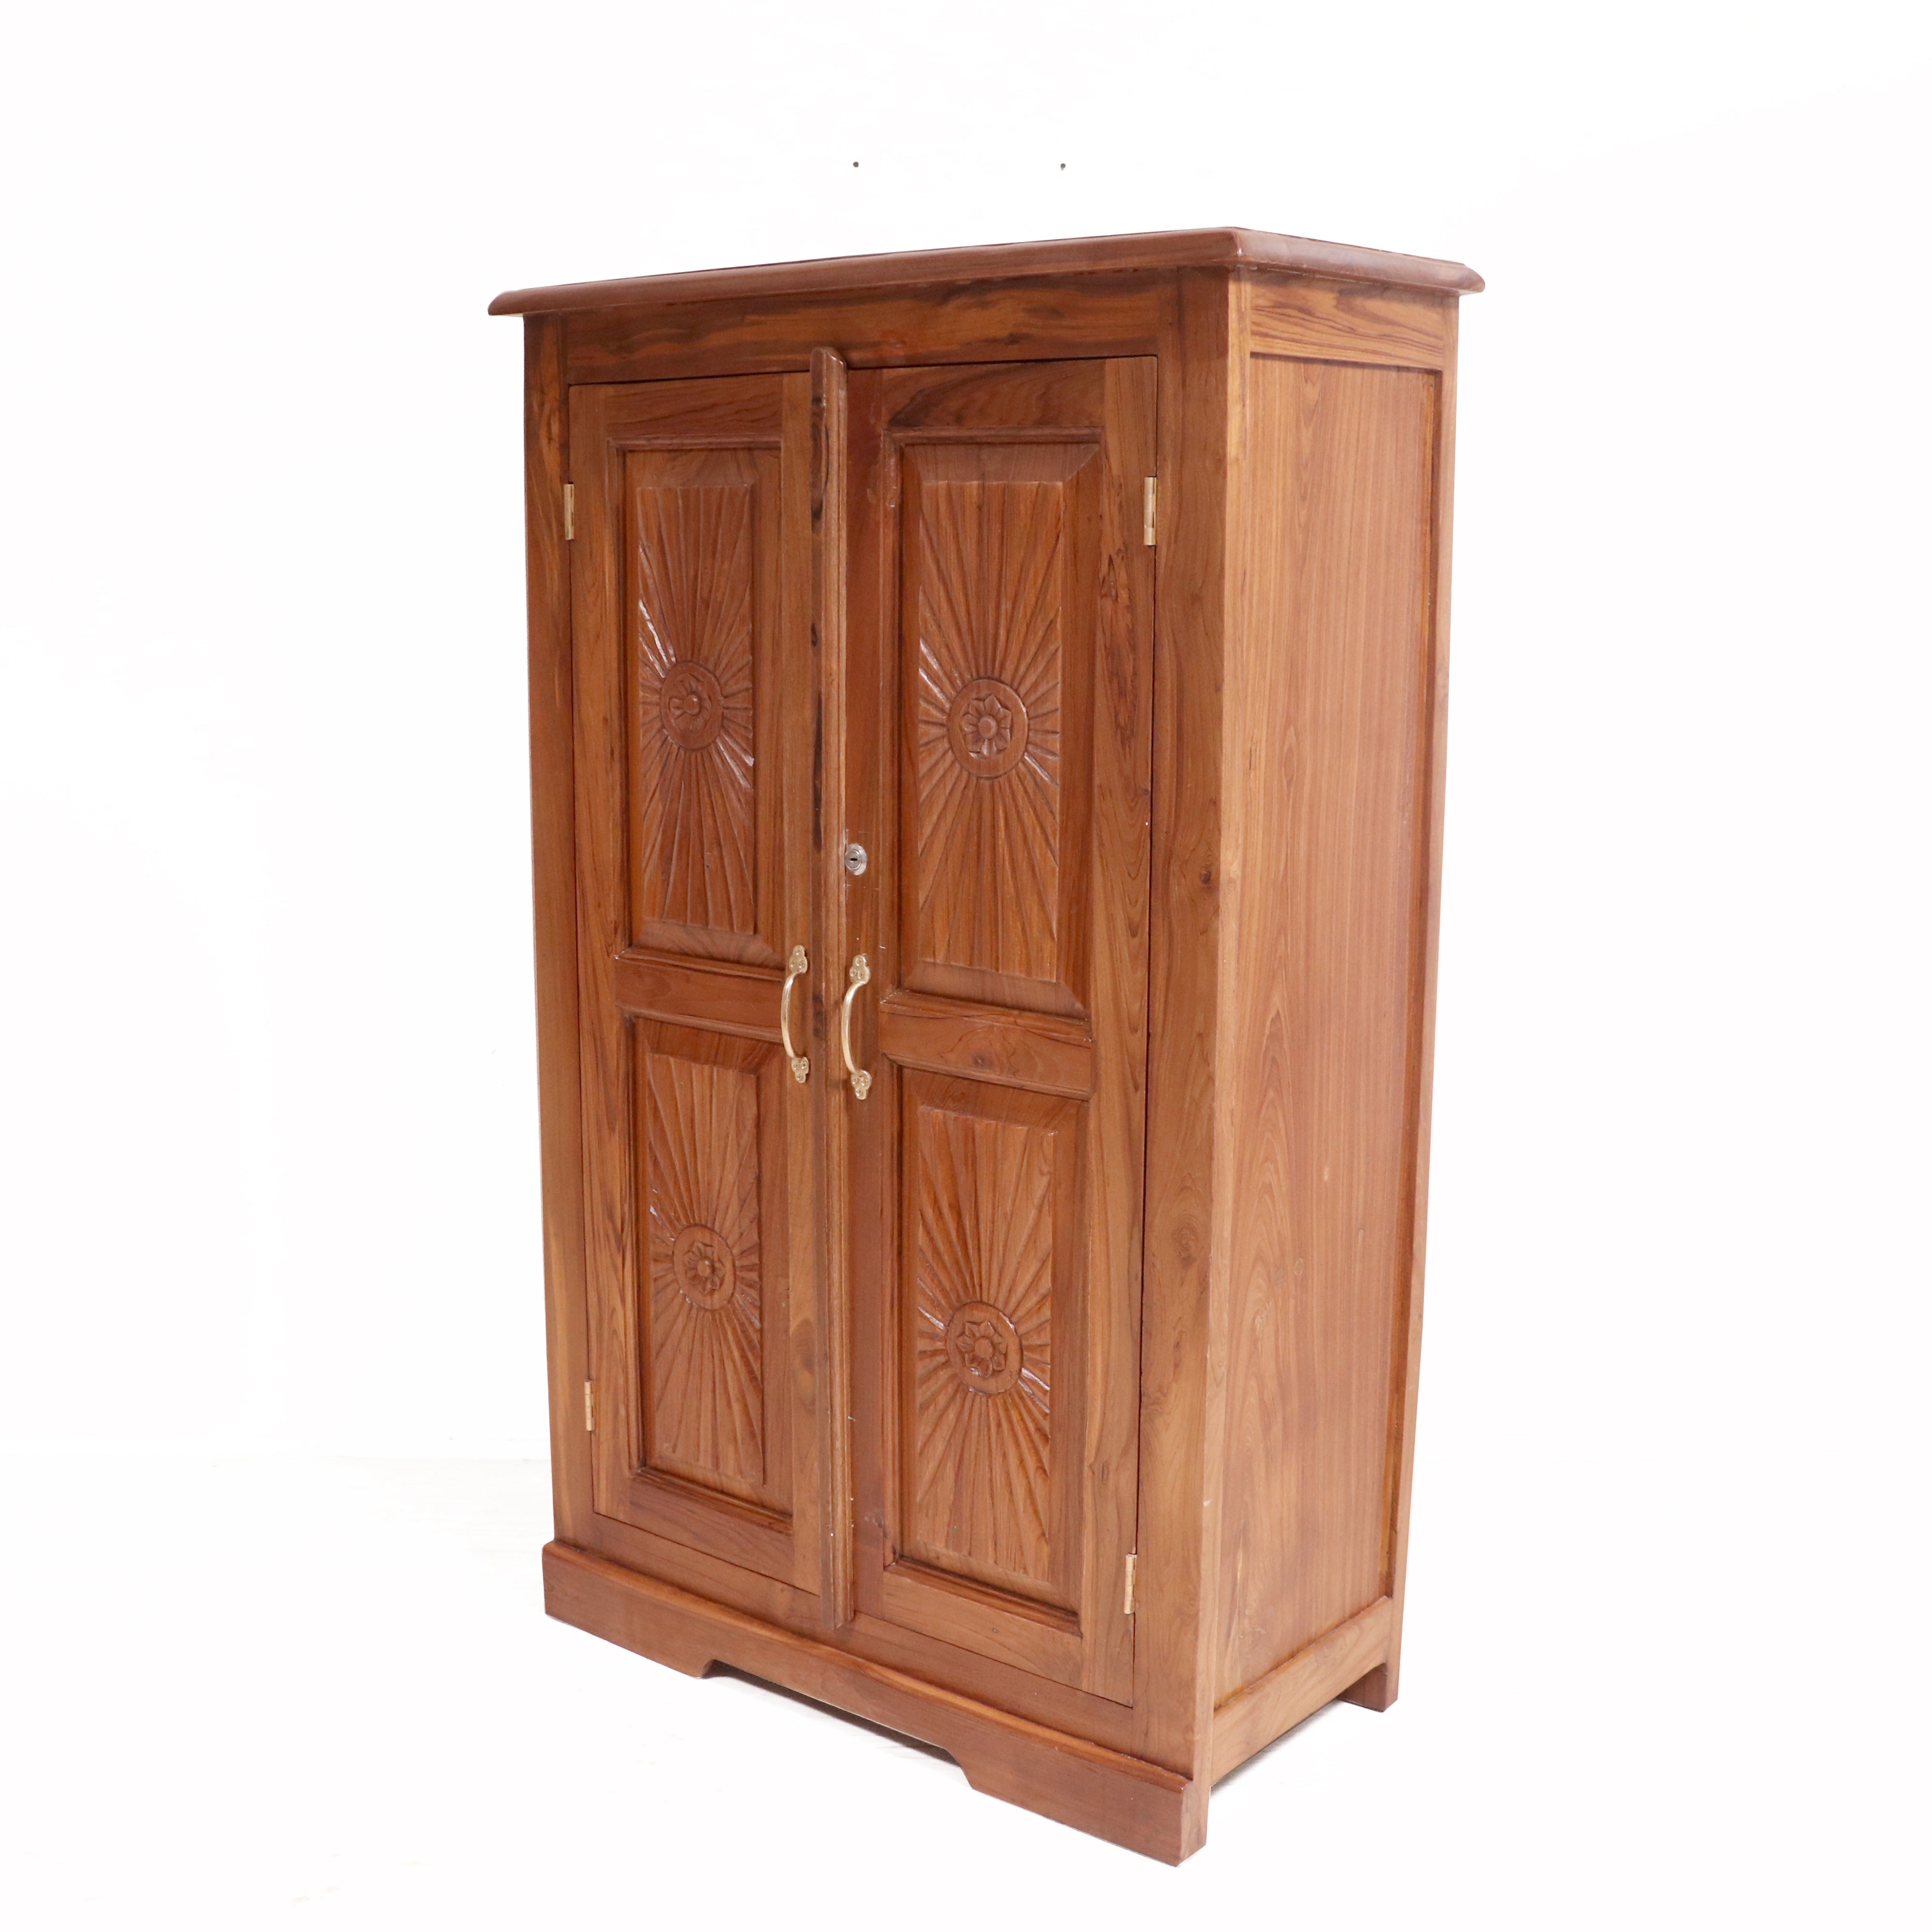 Solid beautifully carved natural tone polished Wardrobe cabinet Wardrobe